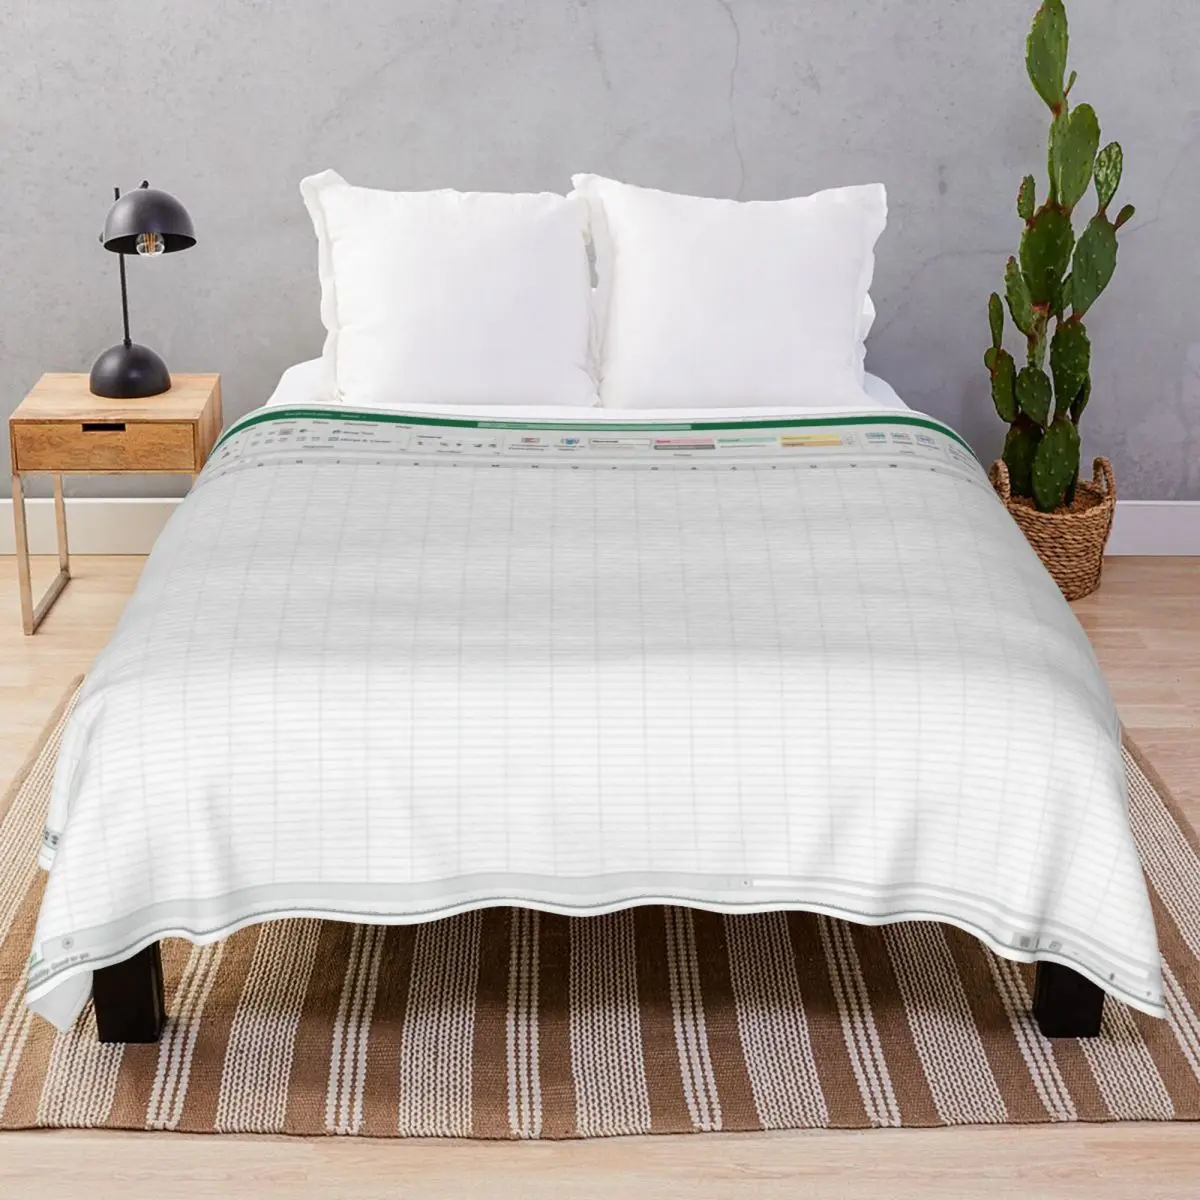 Excel Spreadsheets Blanket Fleece All Season Ultra-Soft Throw Blankets for Bedding Sofa Camp Office